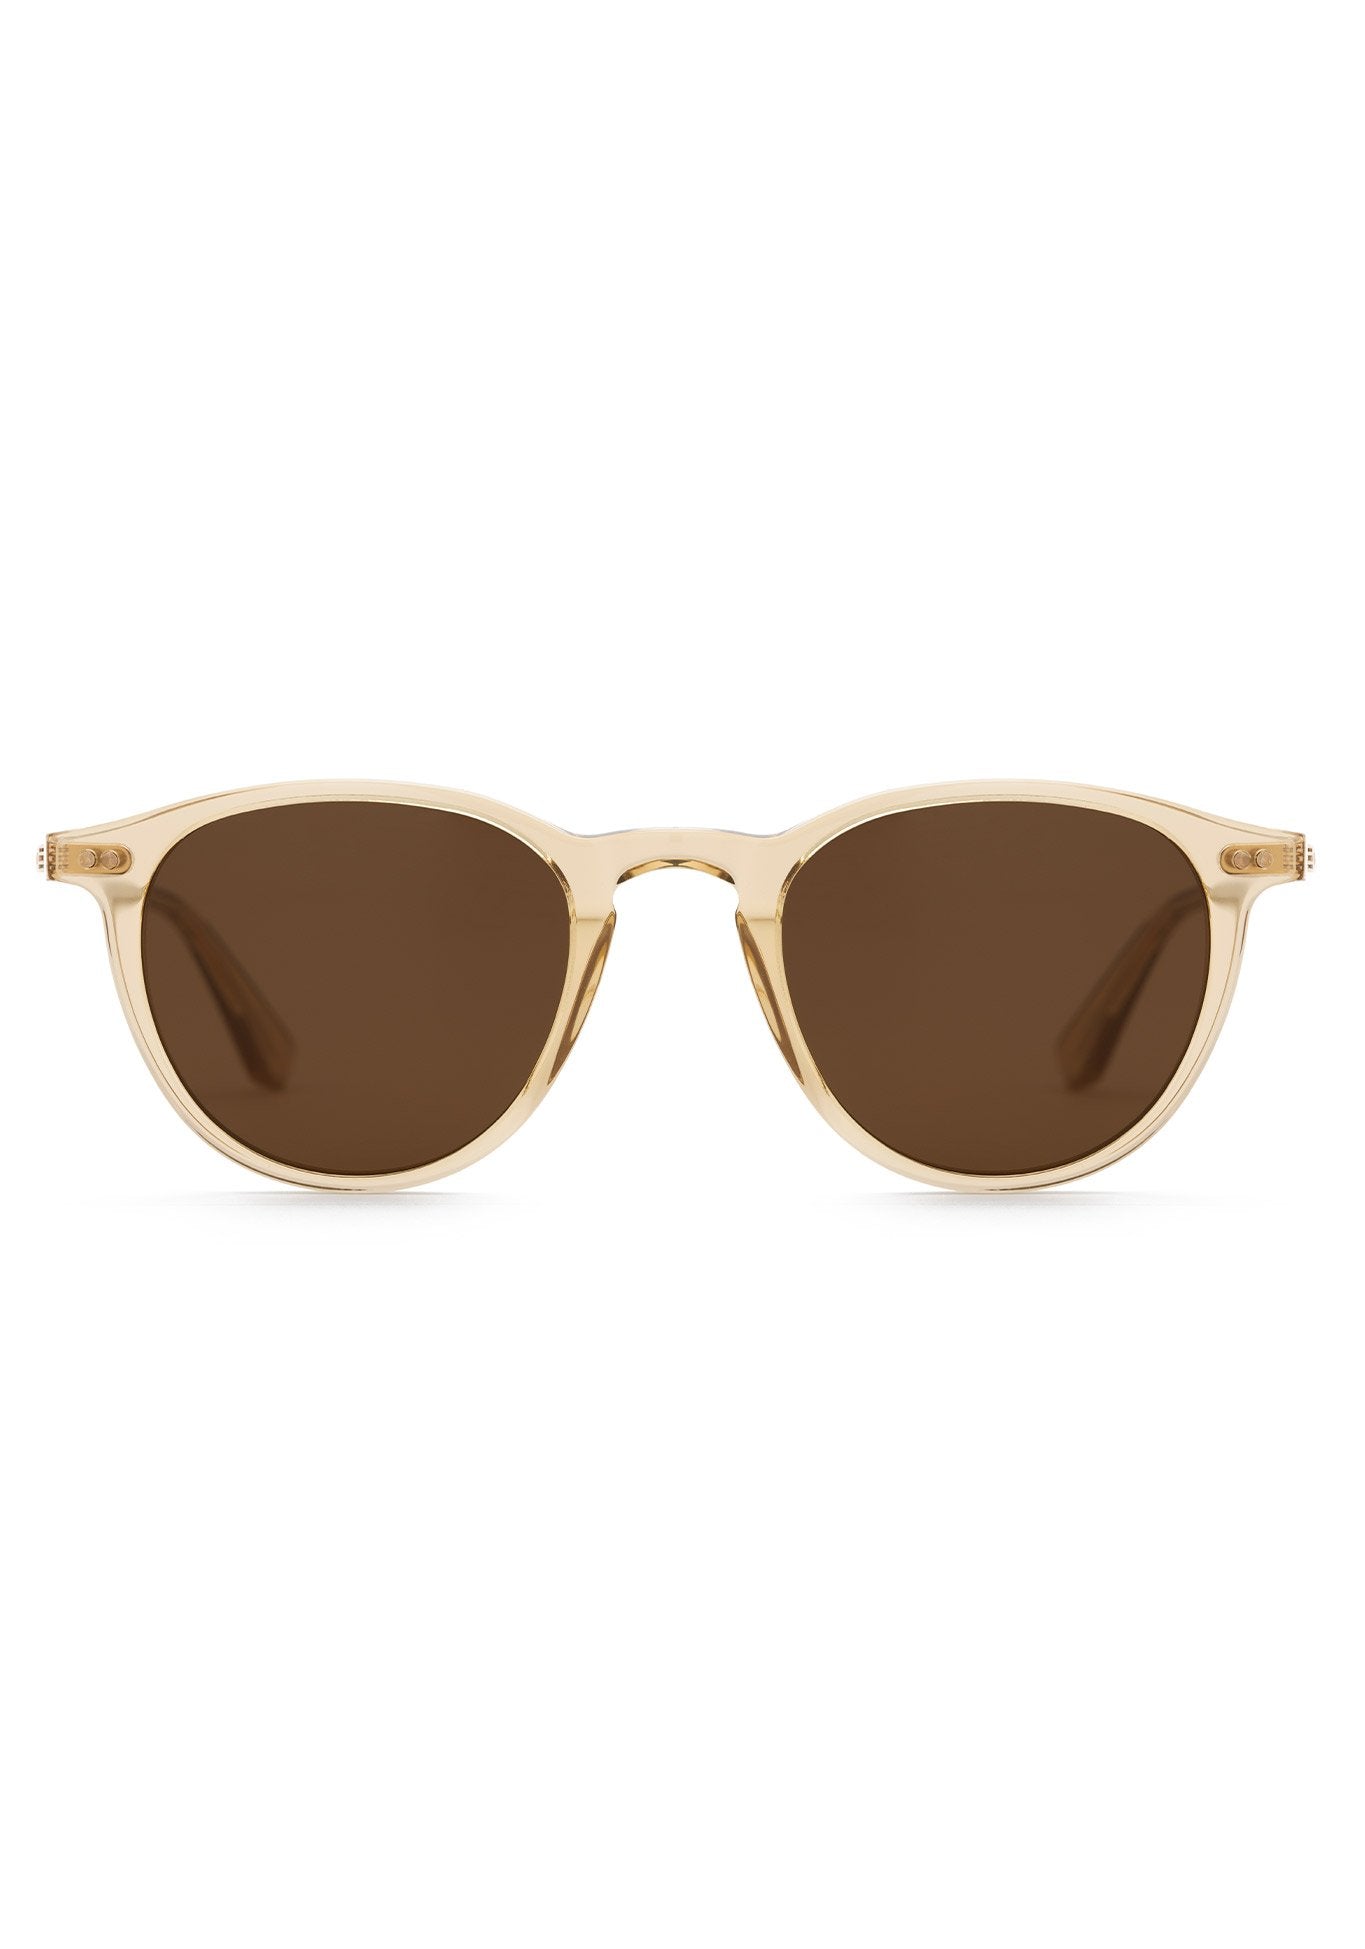 KREWE KENNER - Sweet Tea - Men/Women Polarized Round Sunglasses - 48